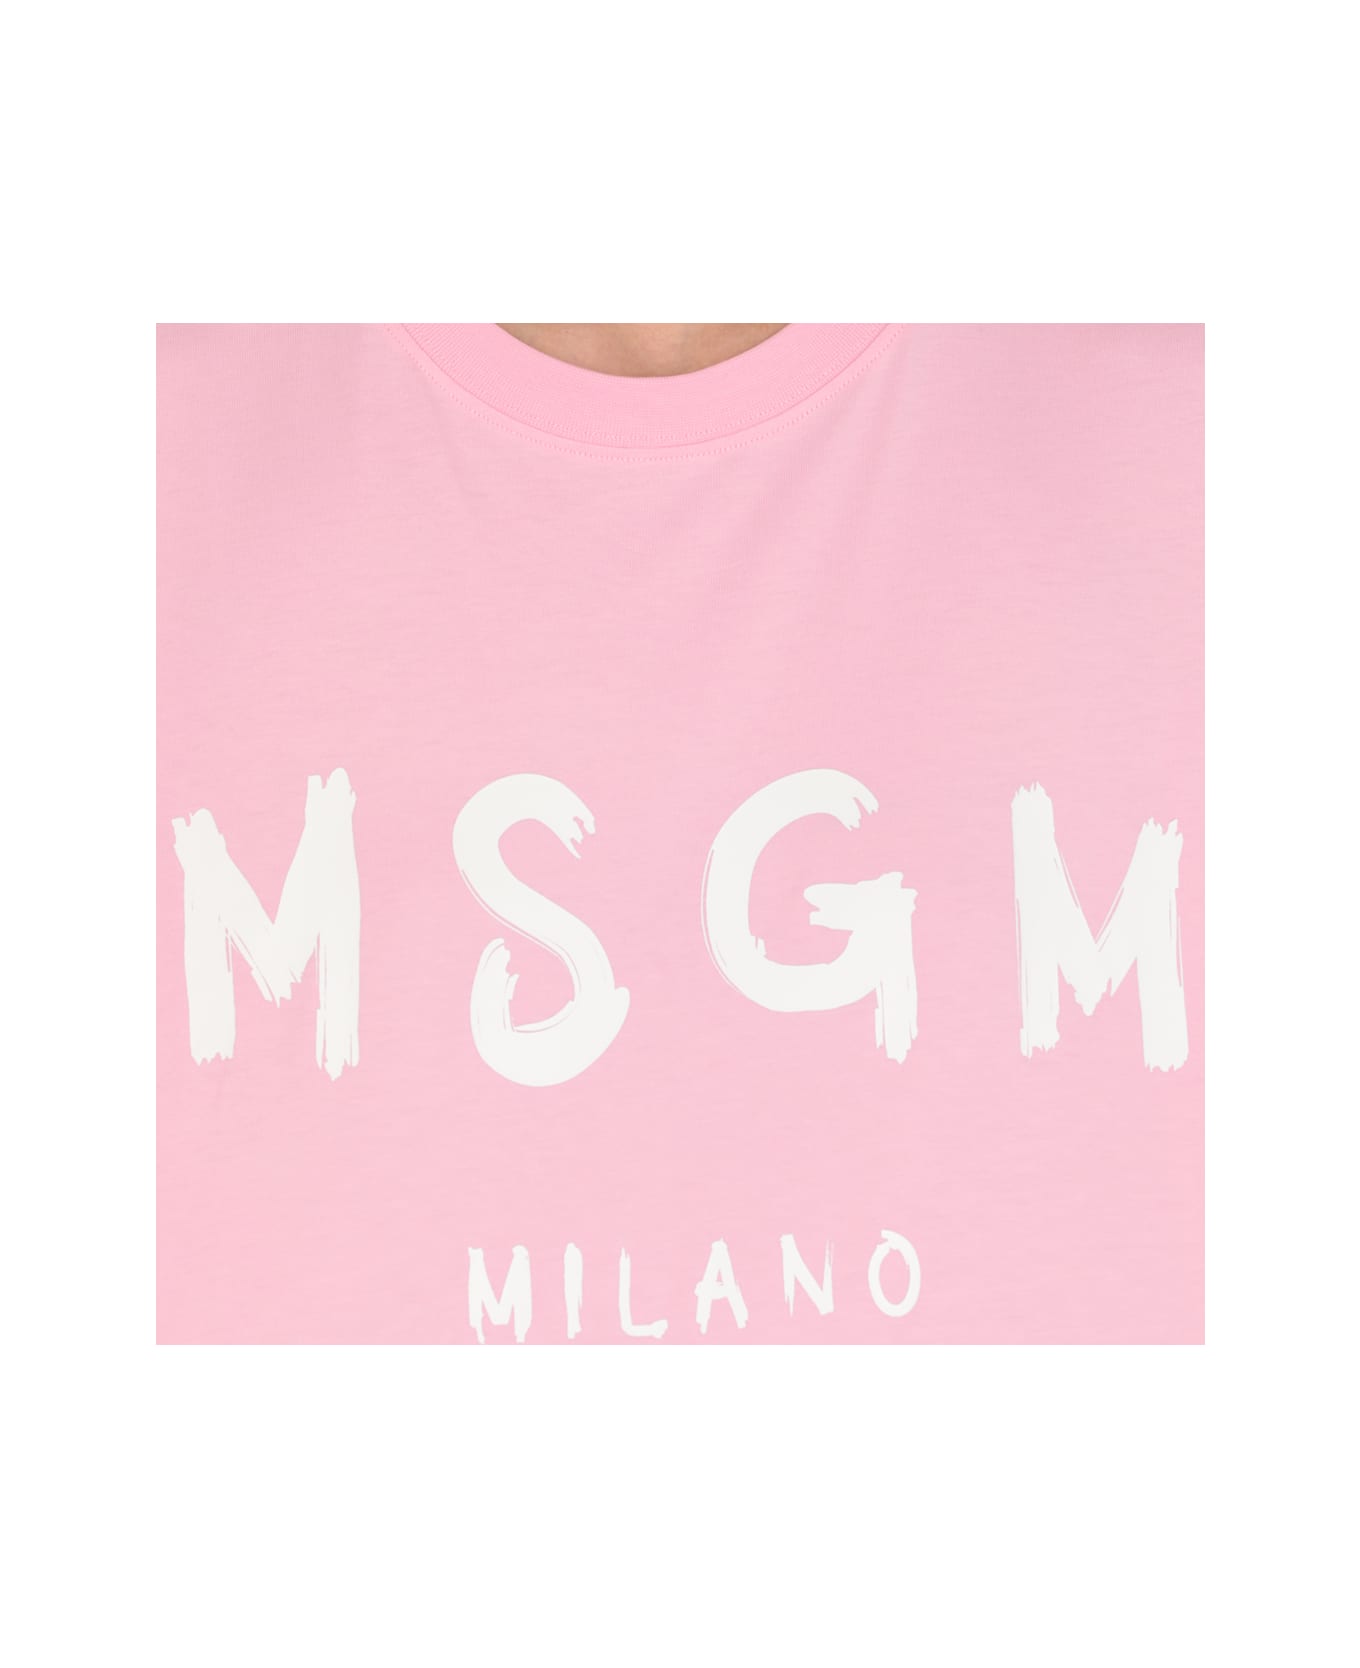 MSGM Dress With Logo - Pink